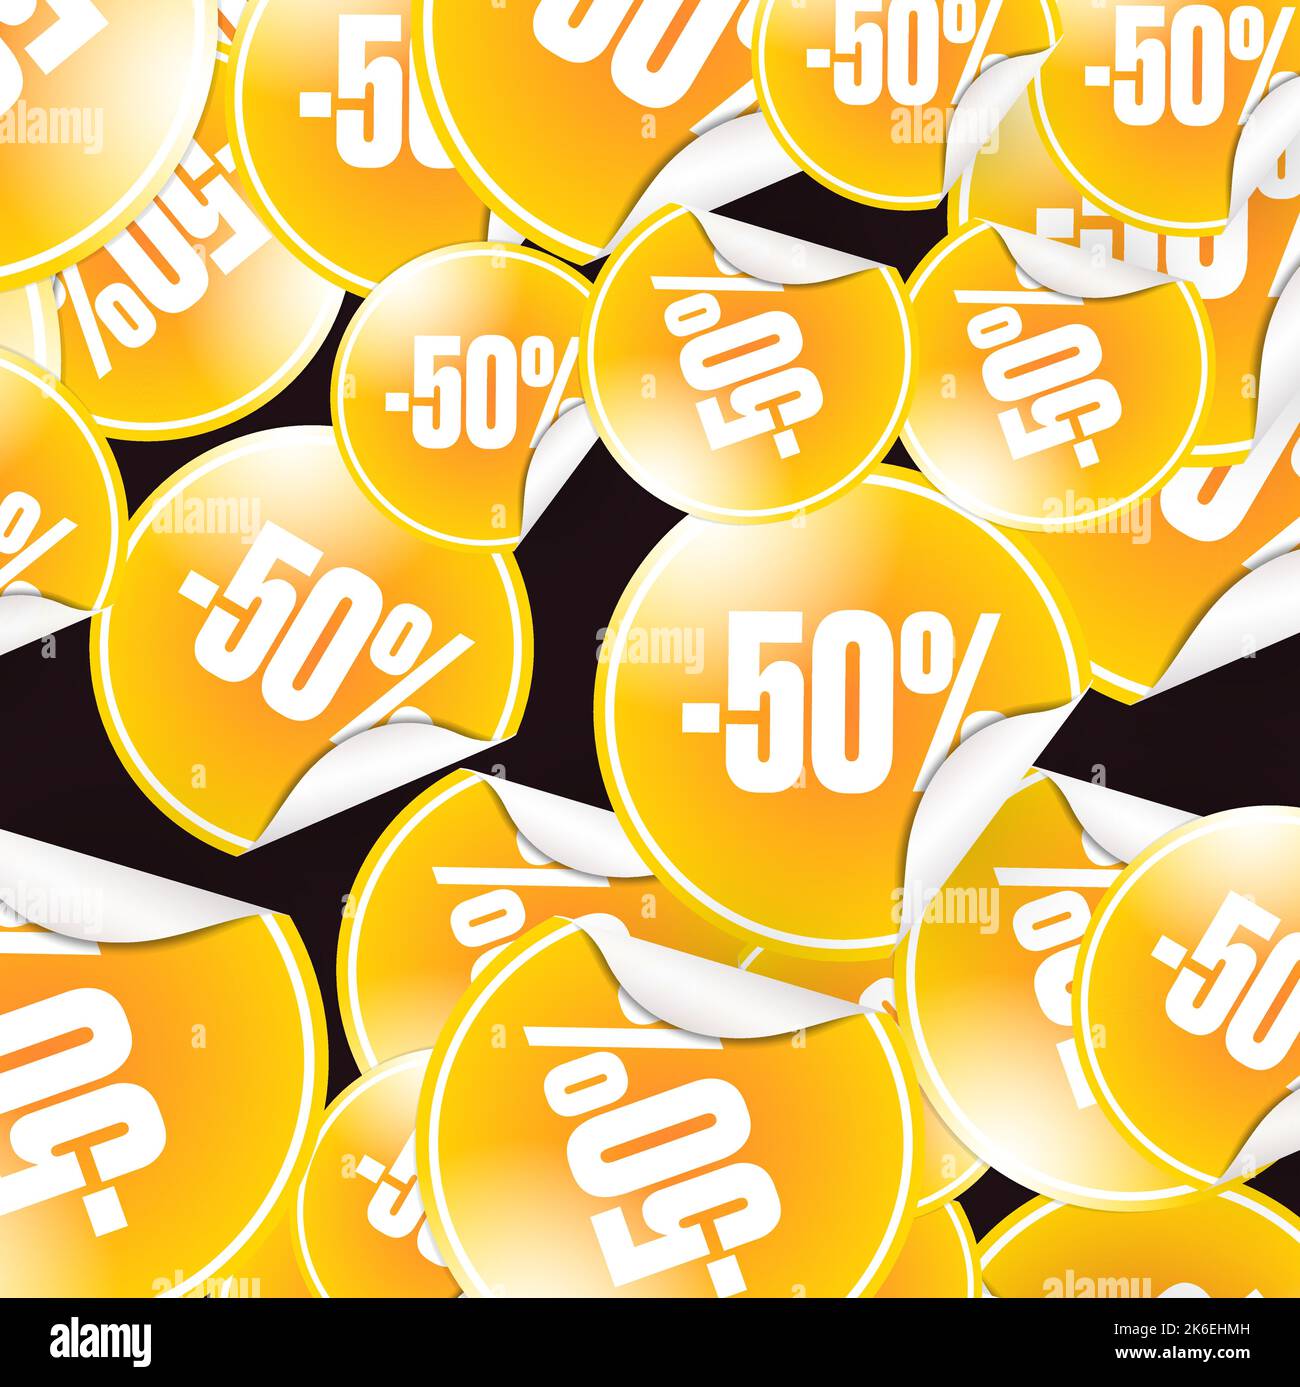 Percent seamless business background pattern. Discount illustration.  Economic finance promotion image Stock Photo - Alamy